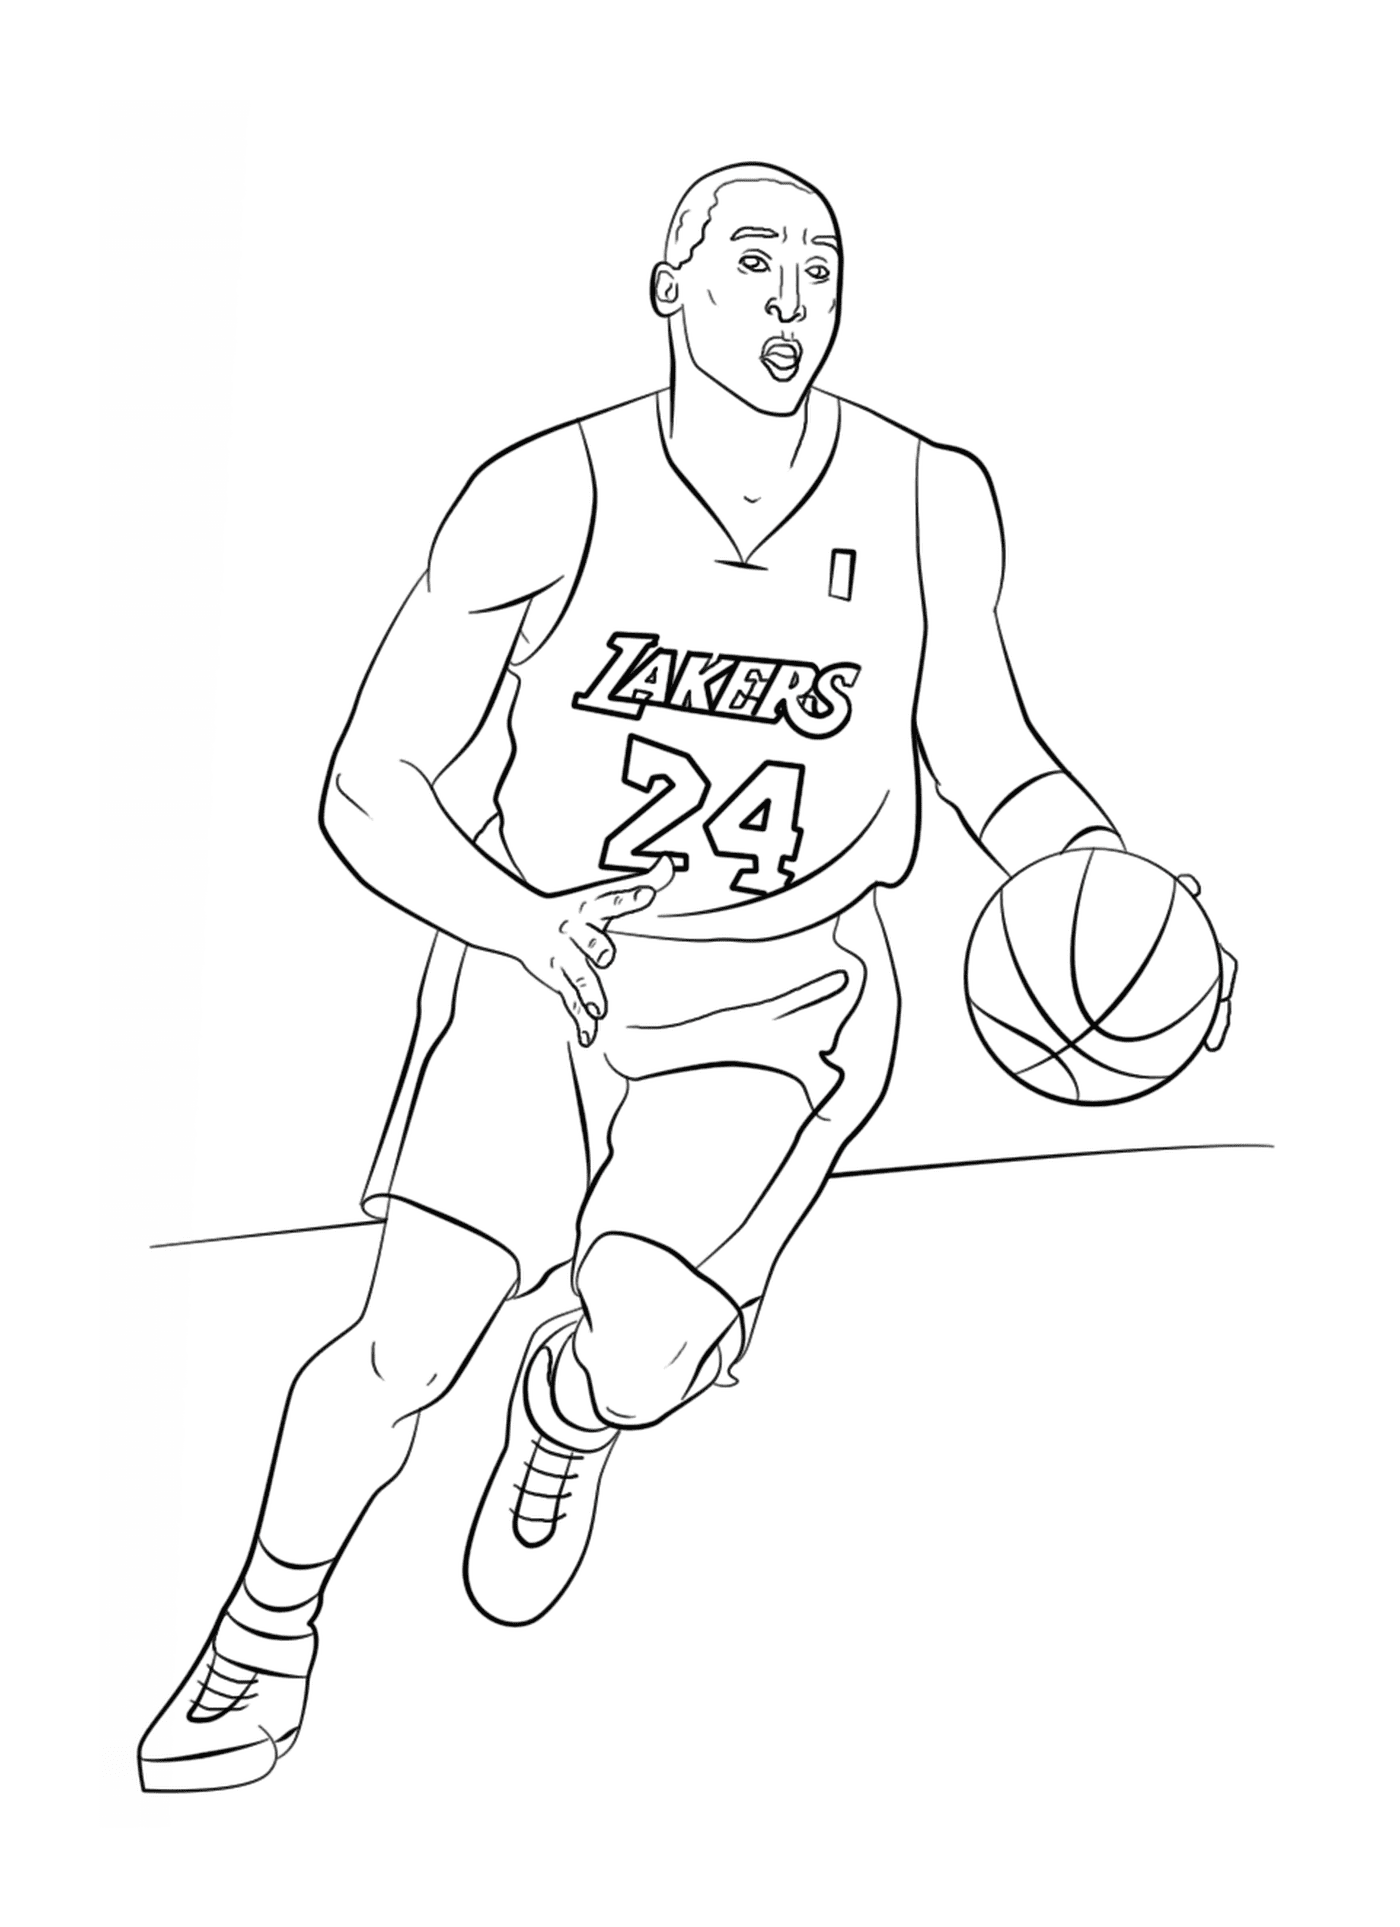  Kobe Bryant holds a basketball ball 